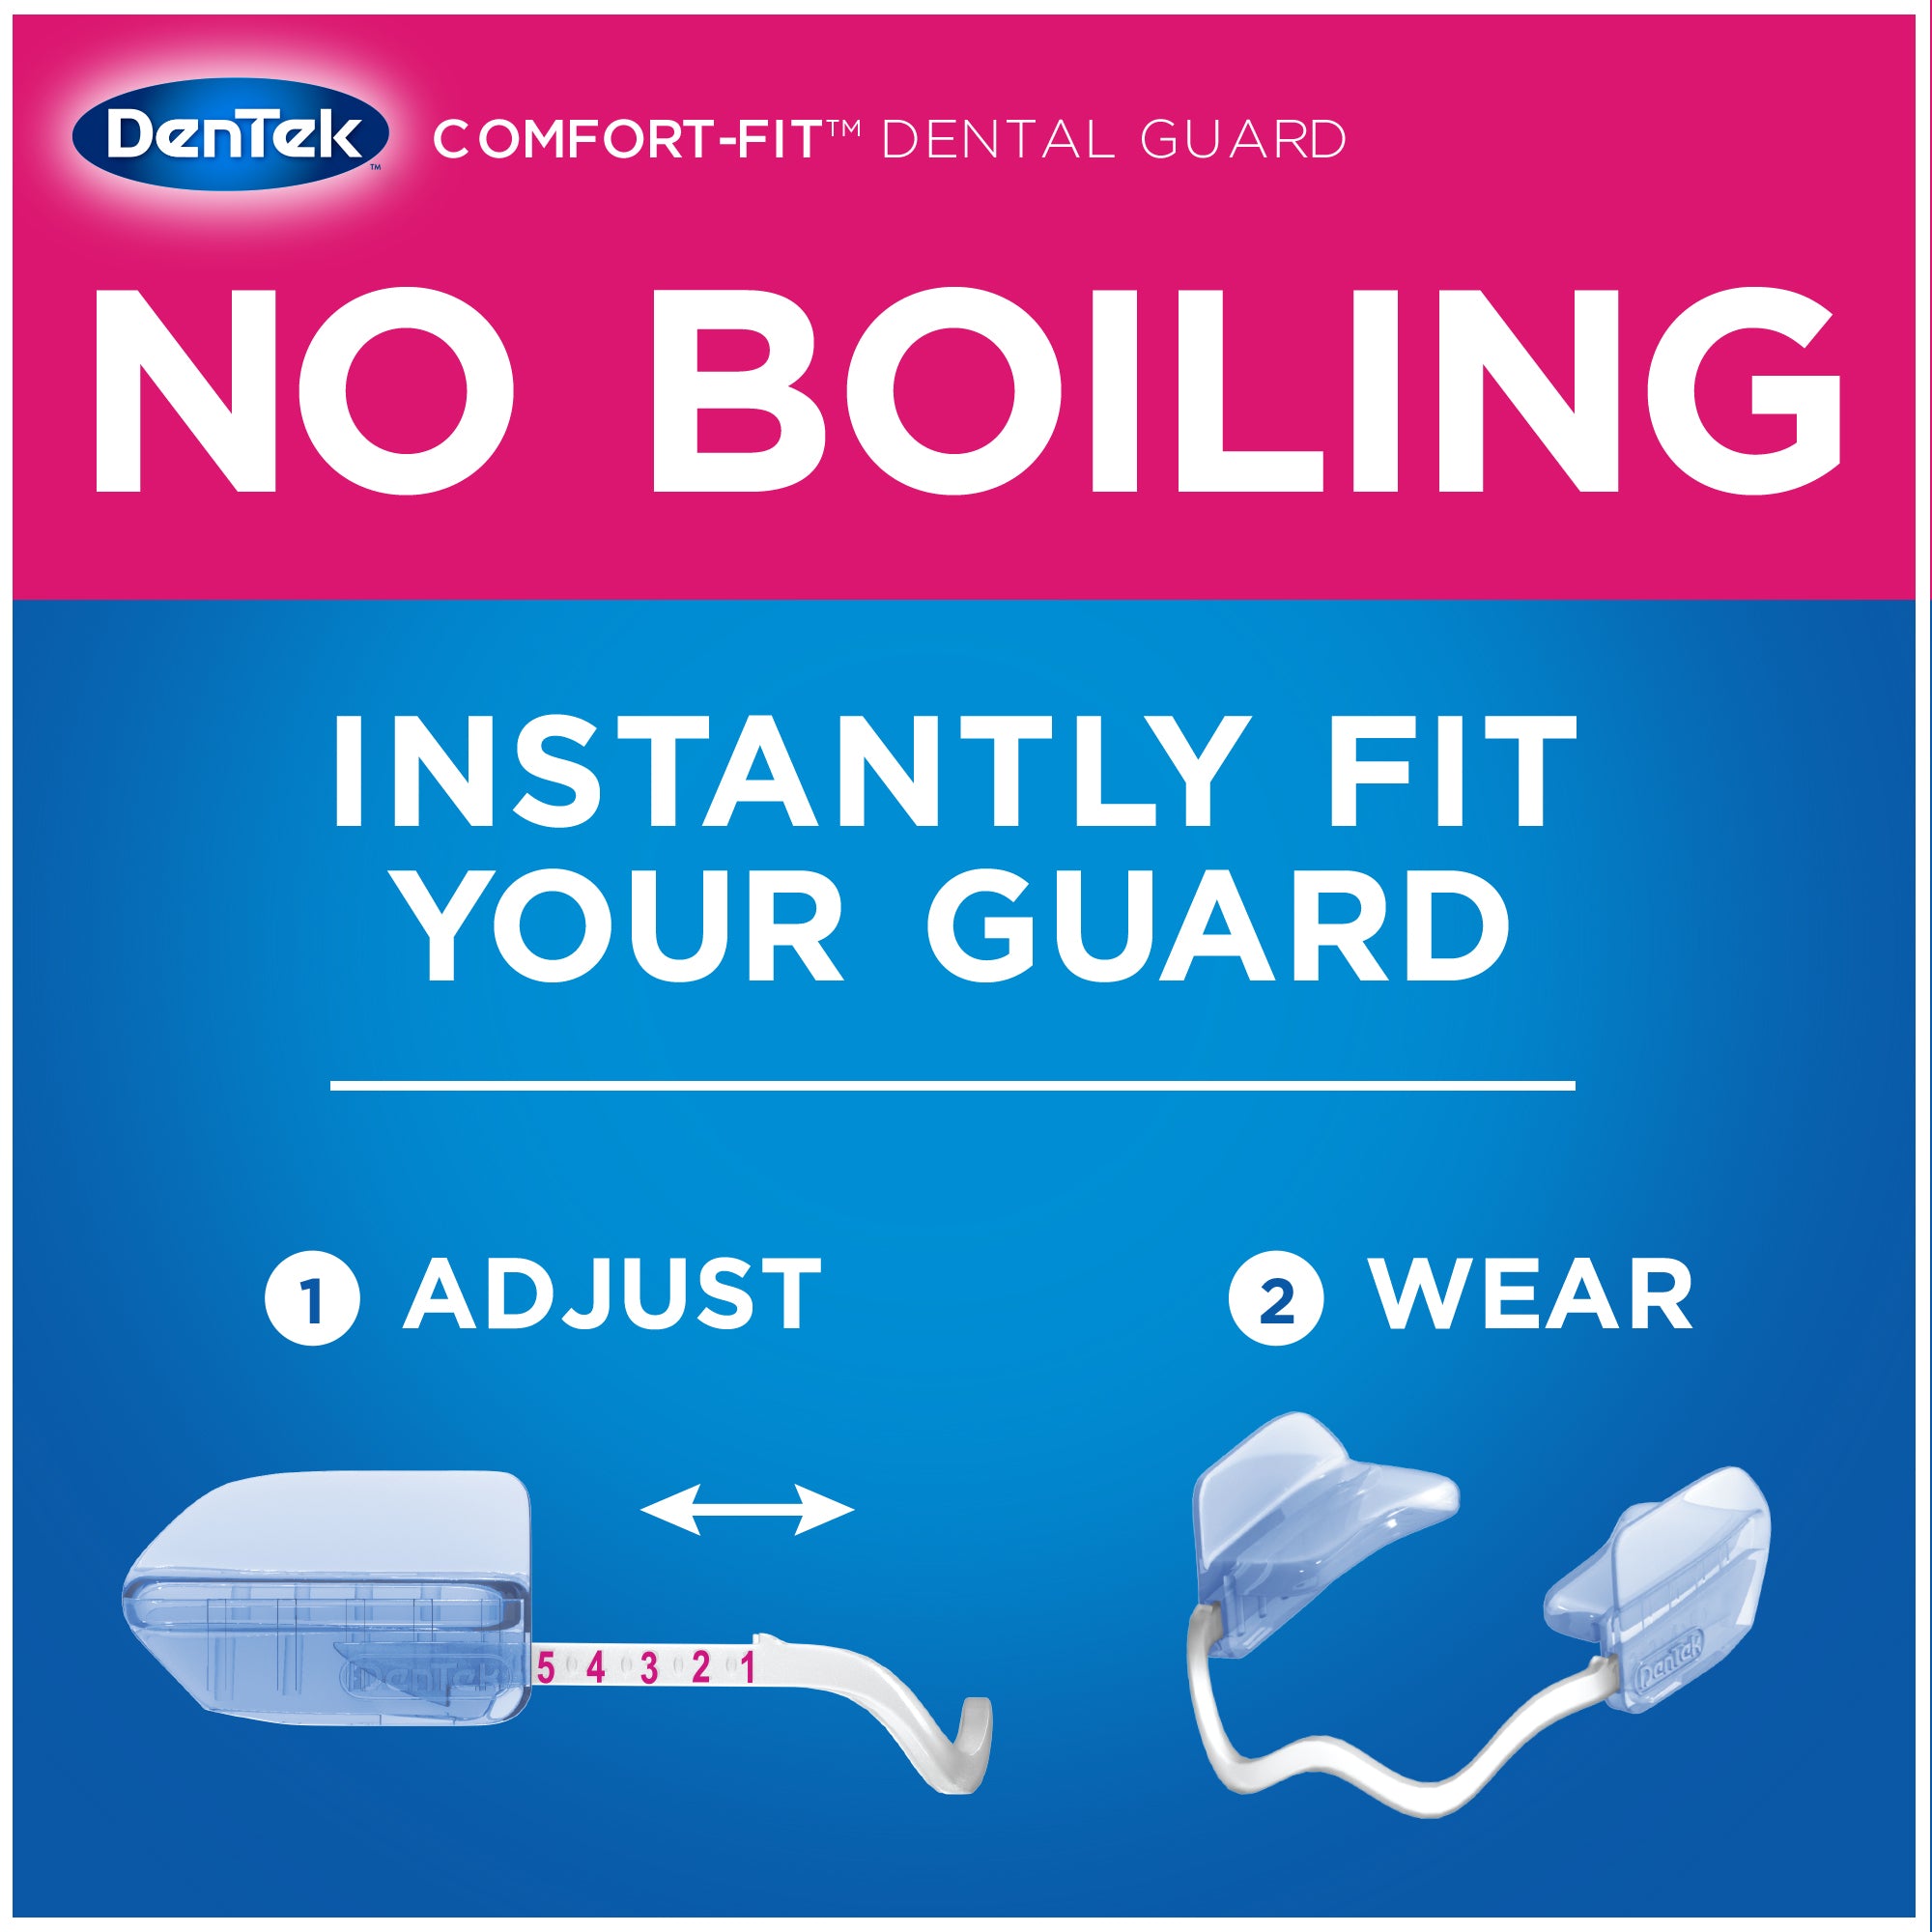 DenTek Comfort-Fit Dental Guards for Nighttime Teeth Grinding